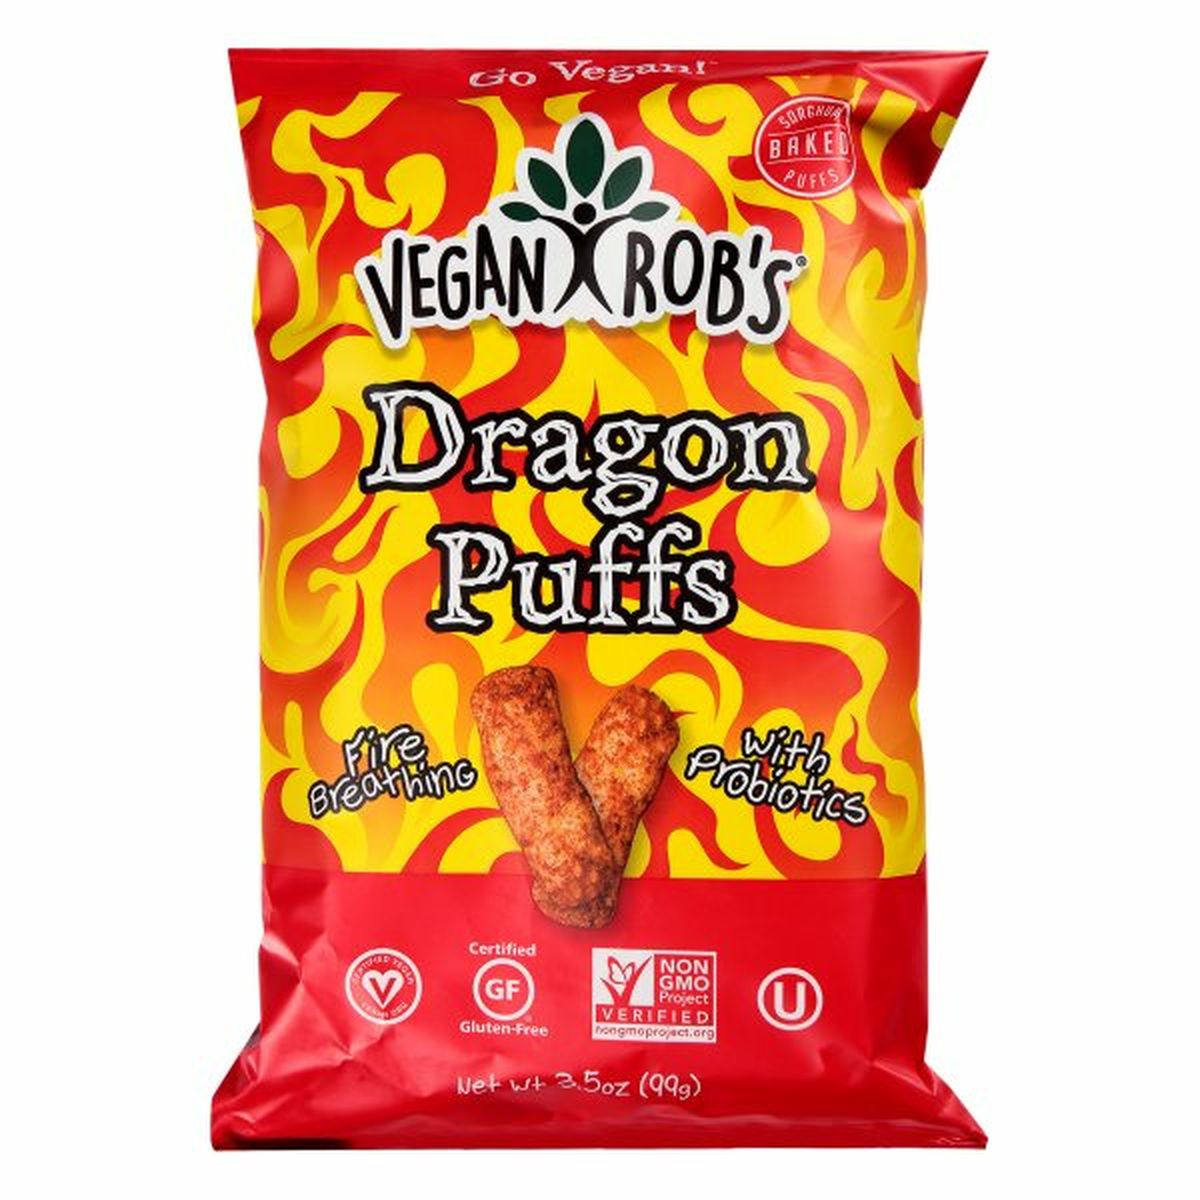 Calories in Vegan Rob's Sorghum Puffs, Dragon